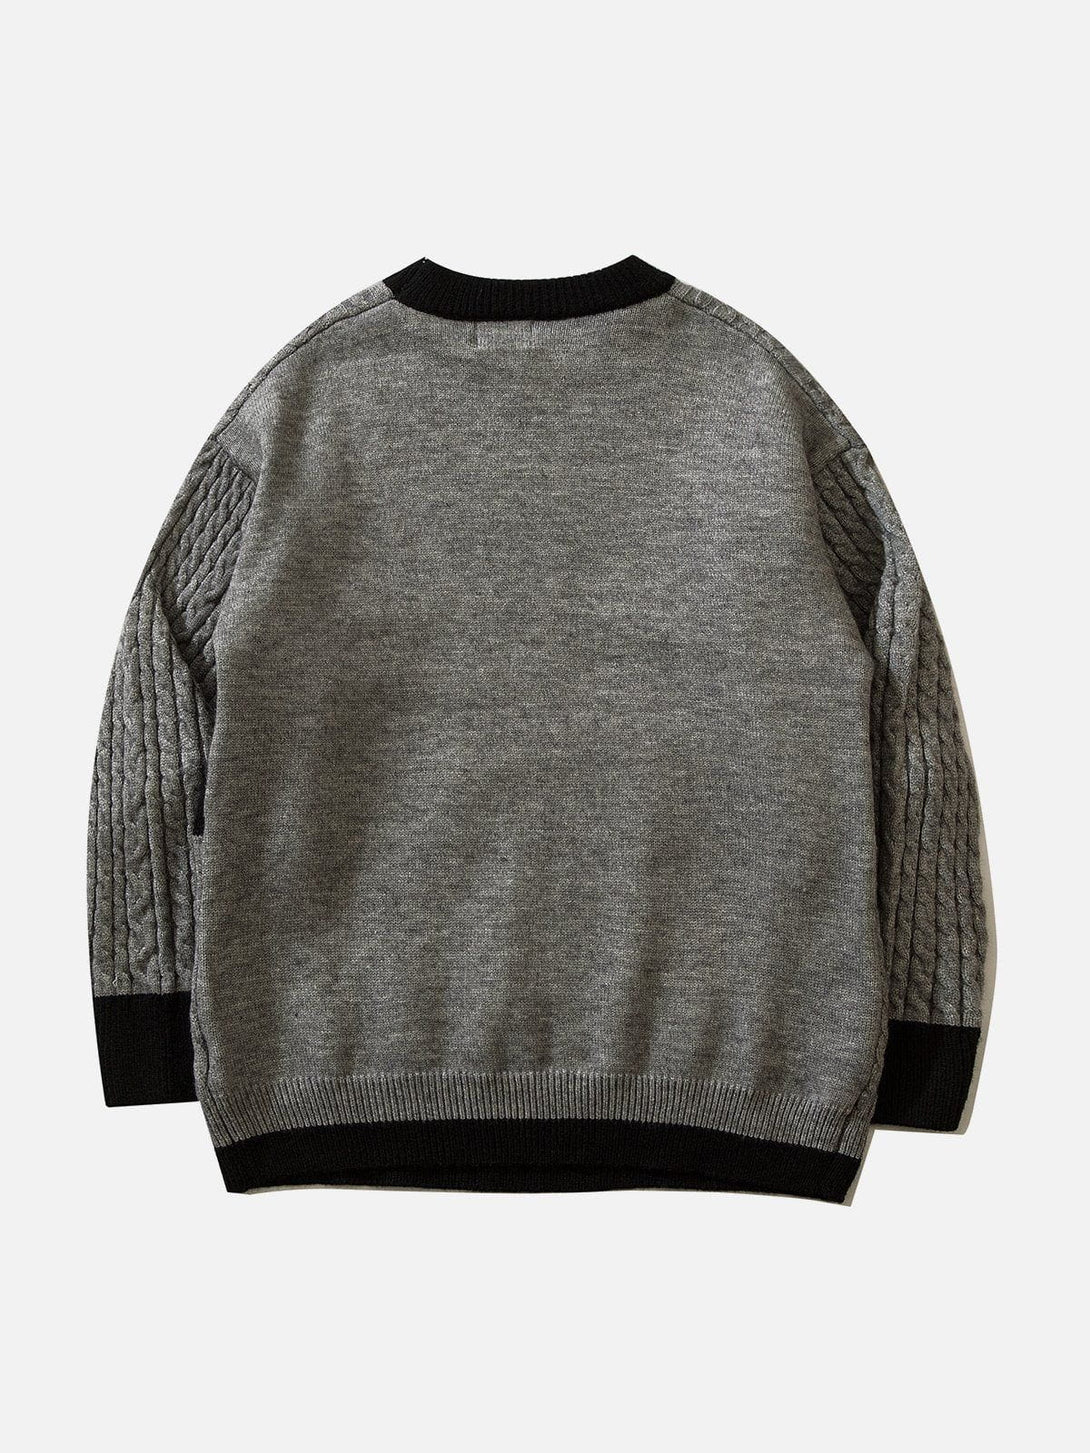 Majesda® - Stitching Color Rabbit Sweater outfit ideas streetwear fashion